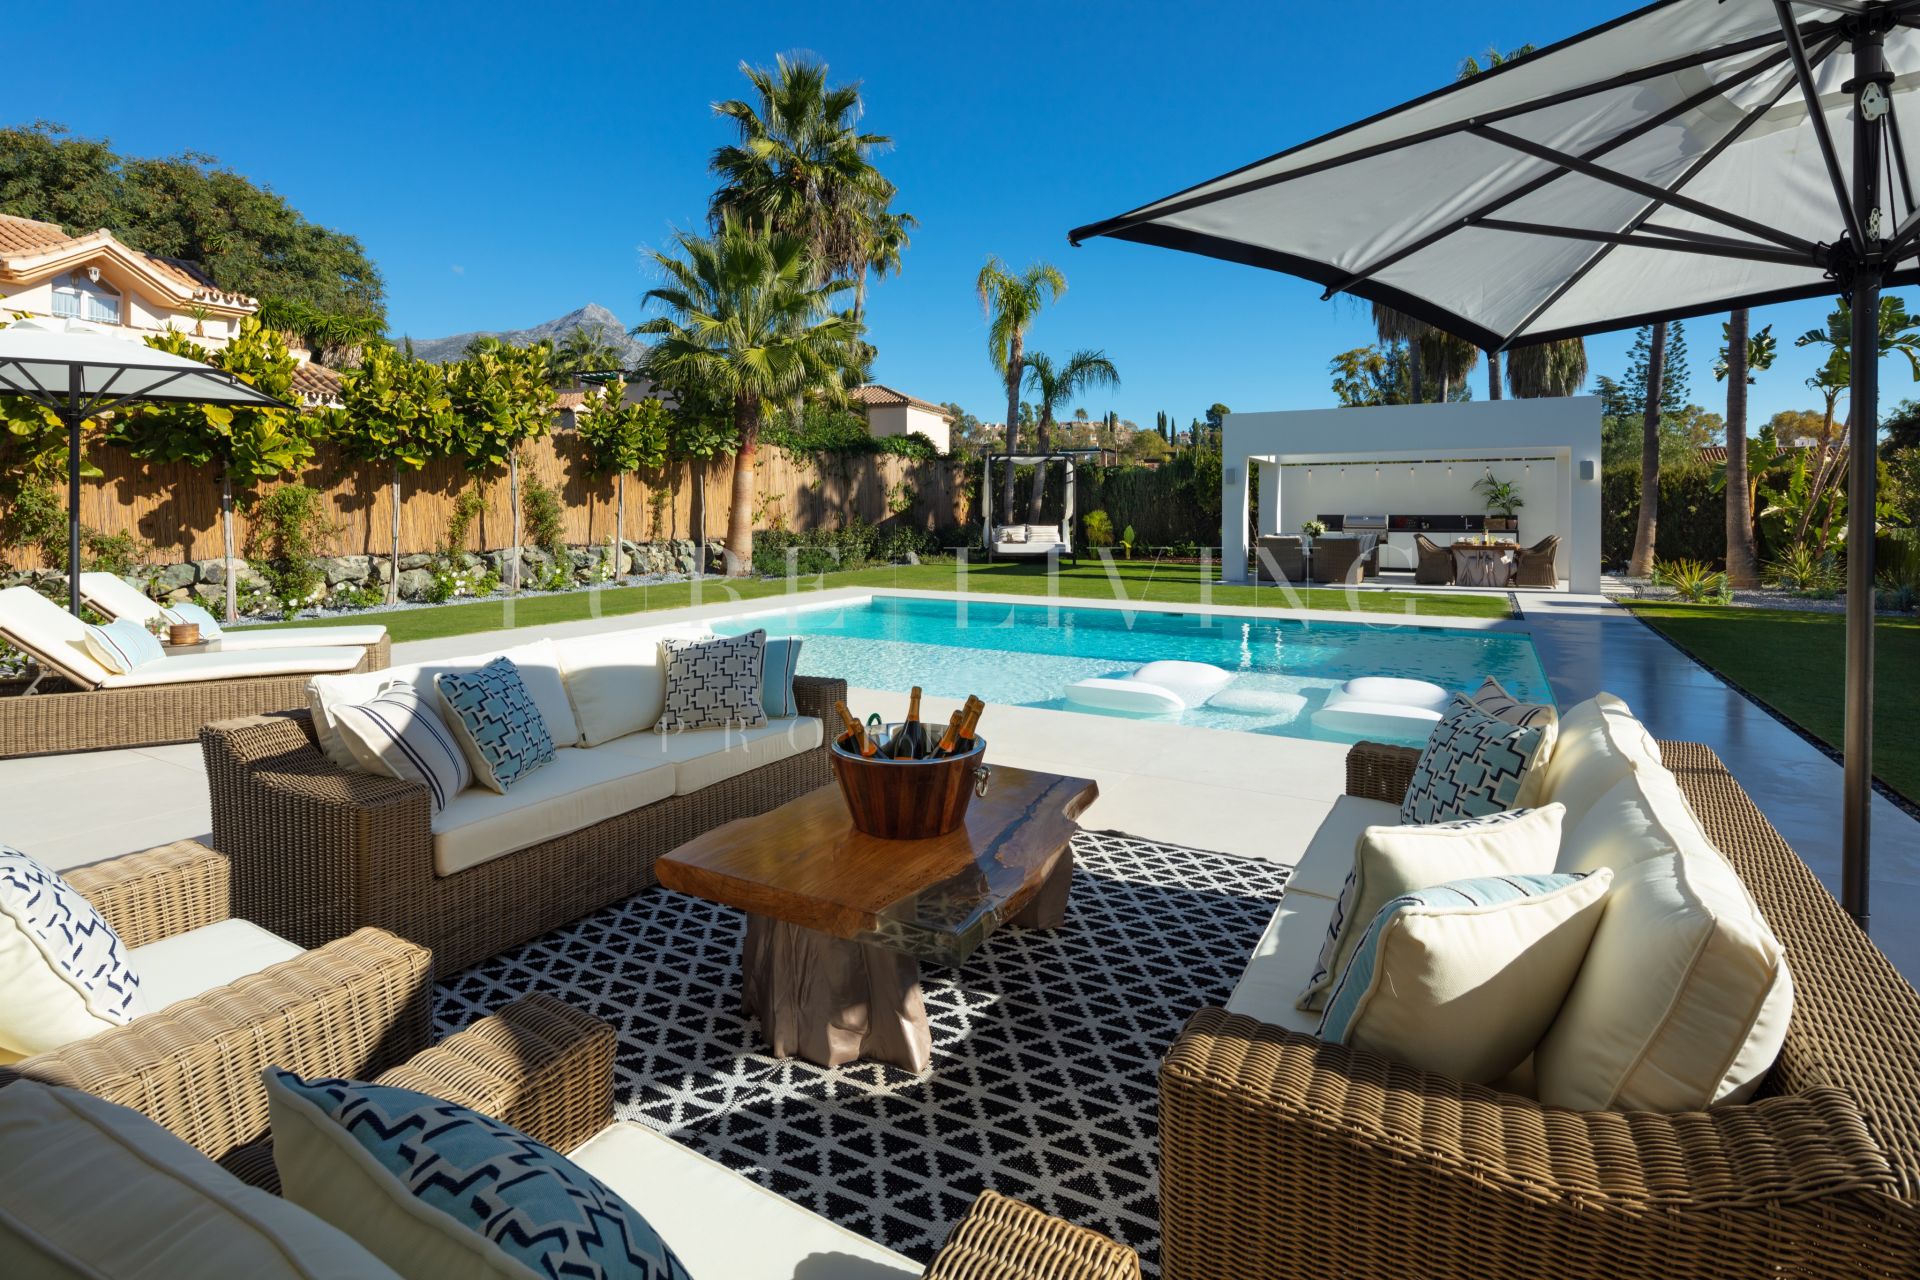 Four bedroom stunning luxury villa is located in the prestigious Nueva Andalucia area.